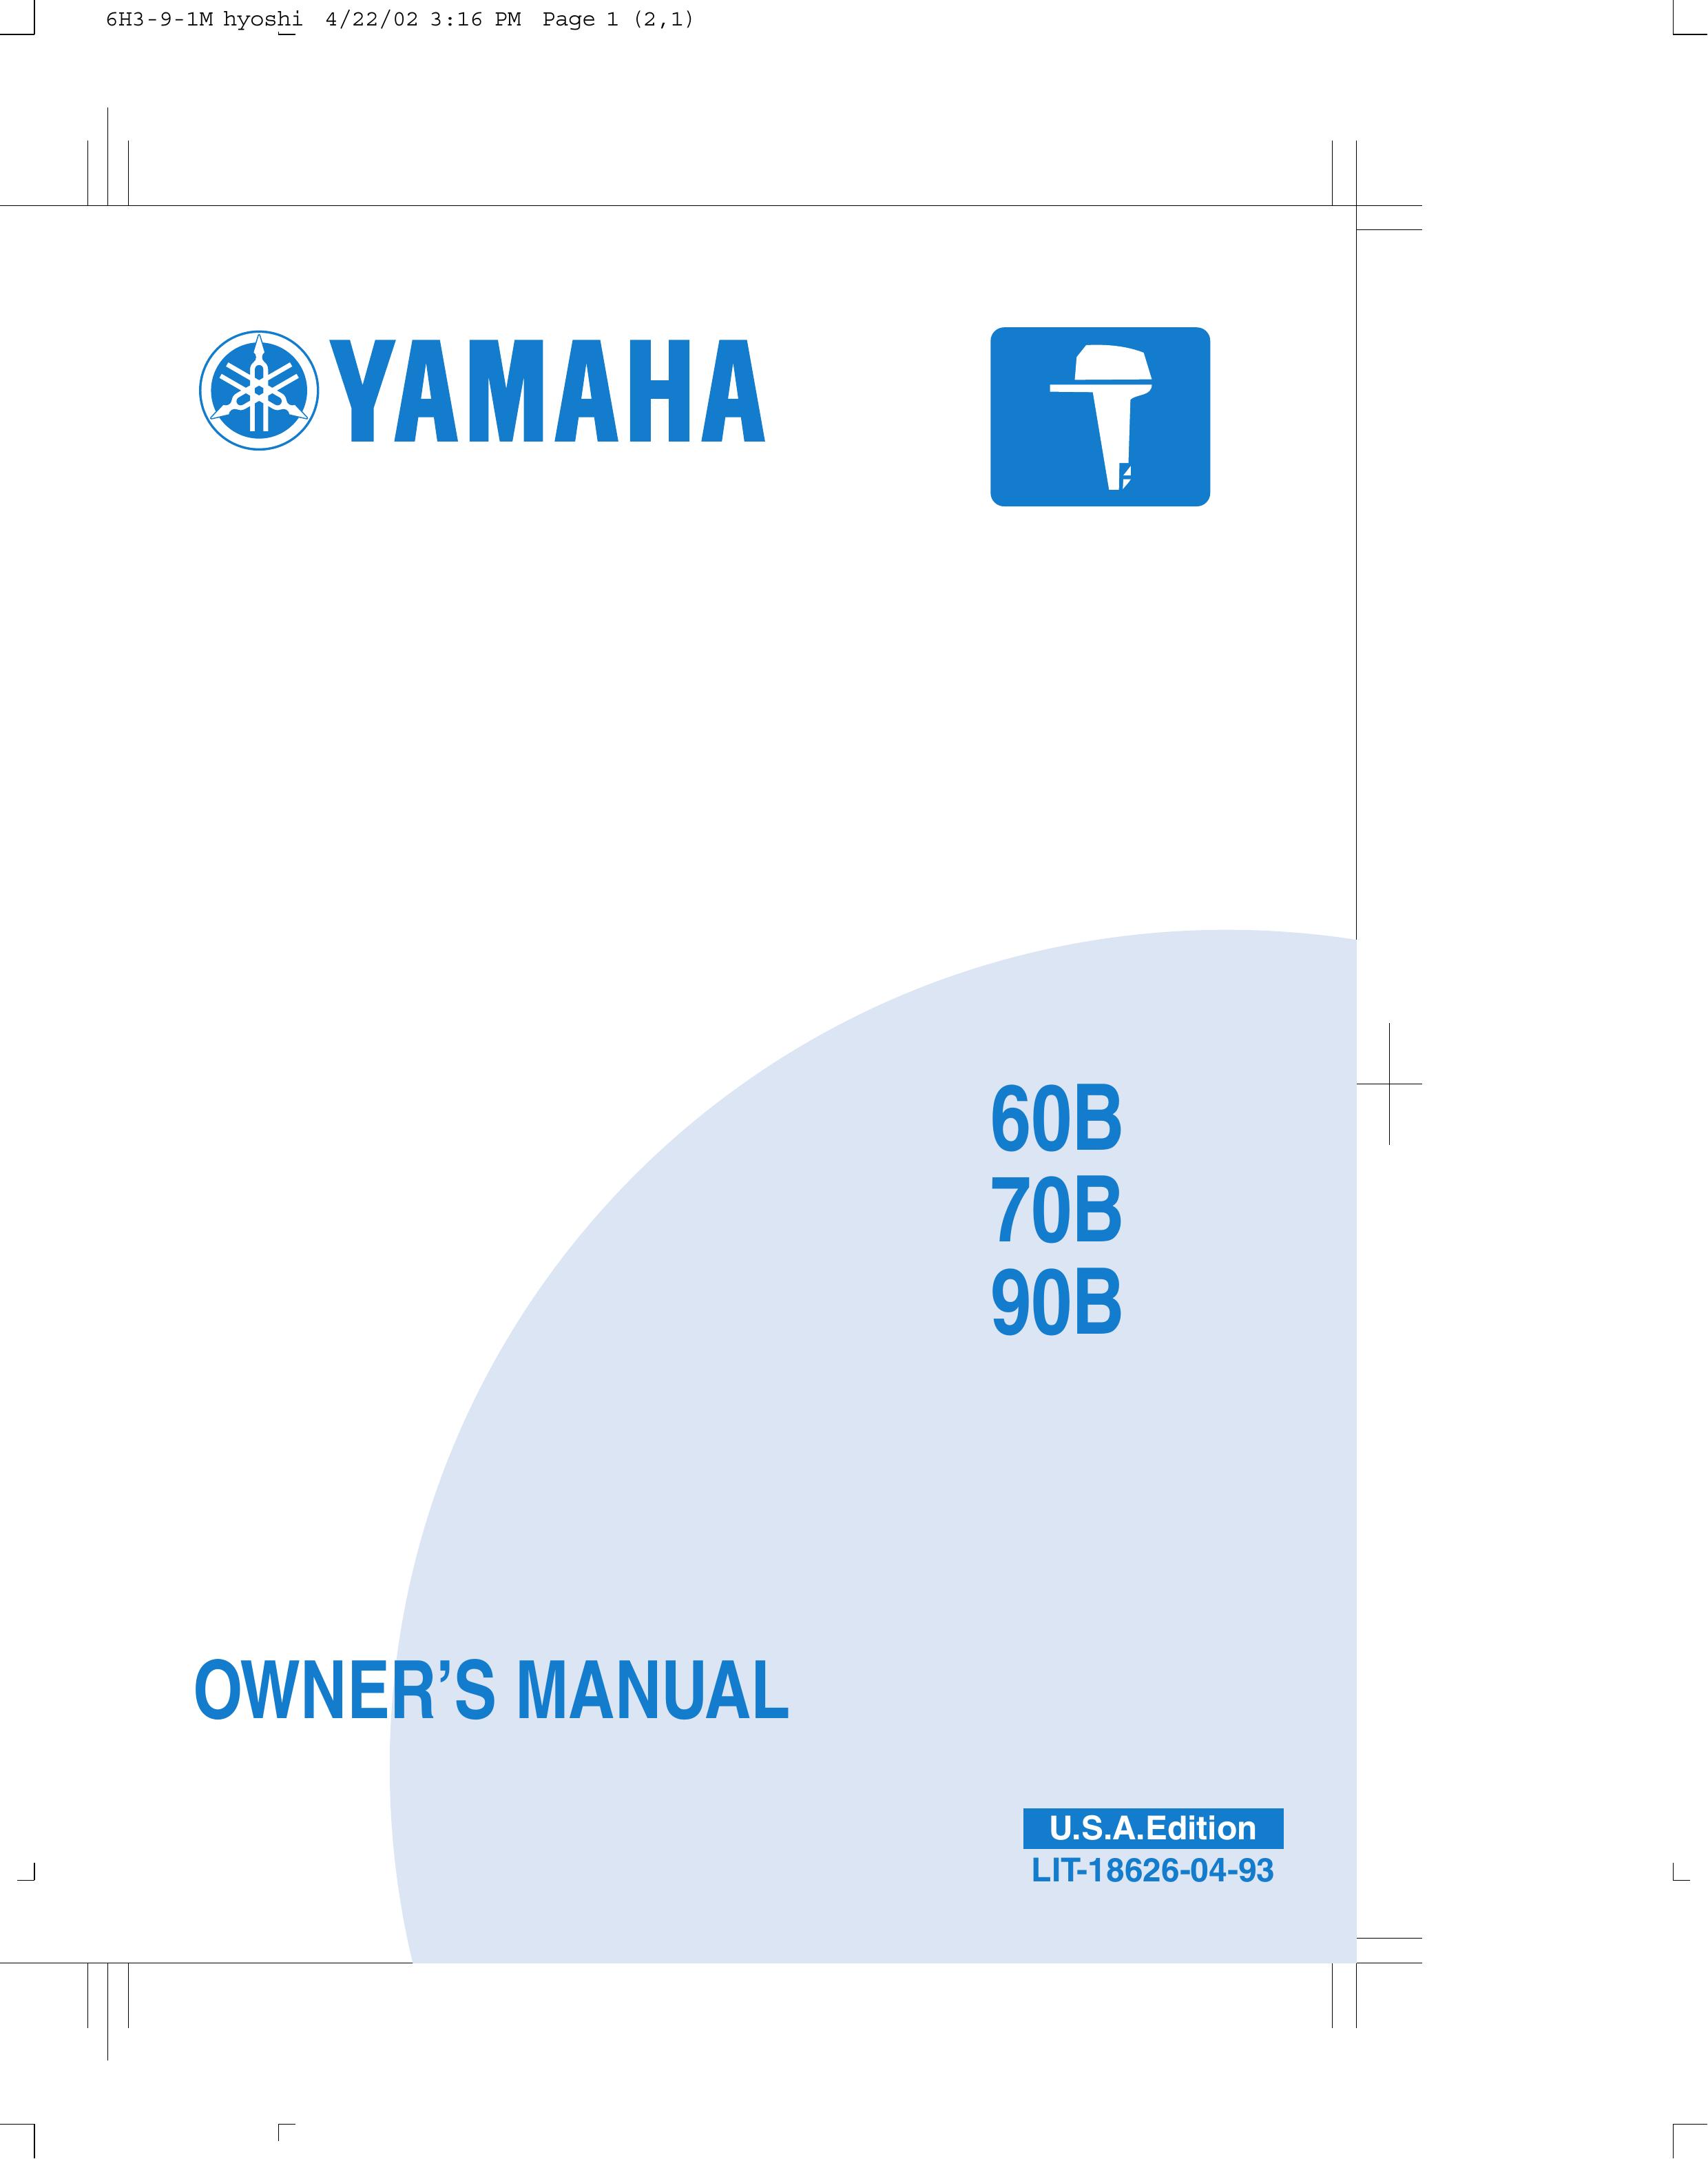 Yamaha 70B Outboard Motor User Manual